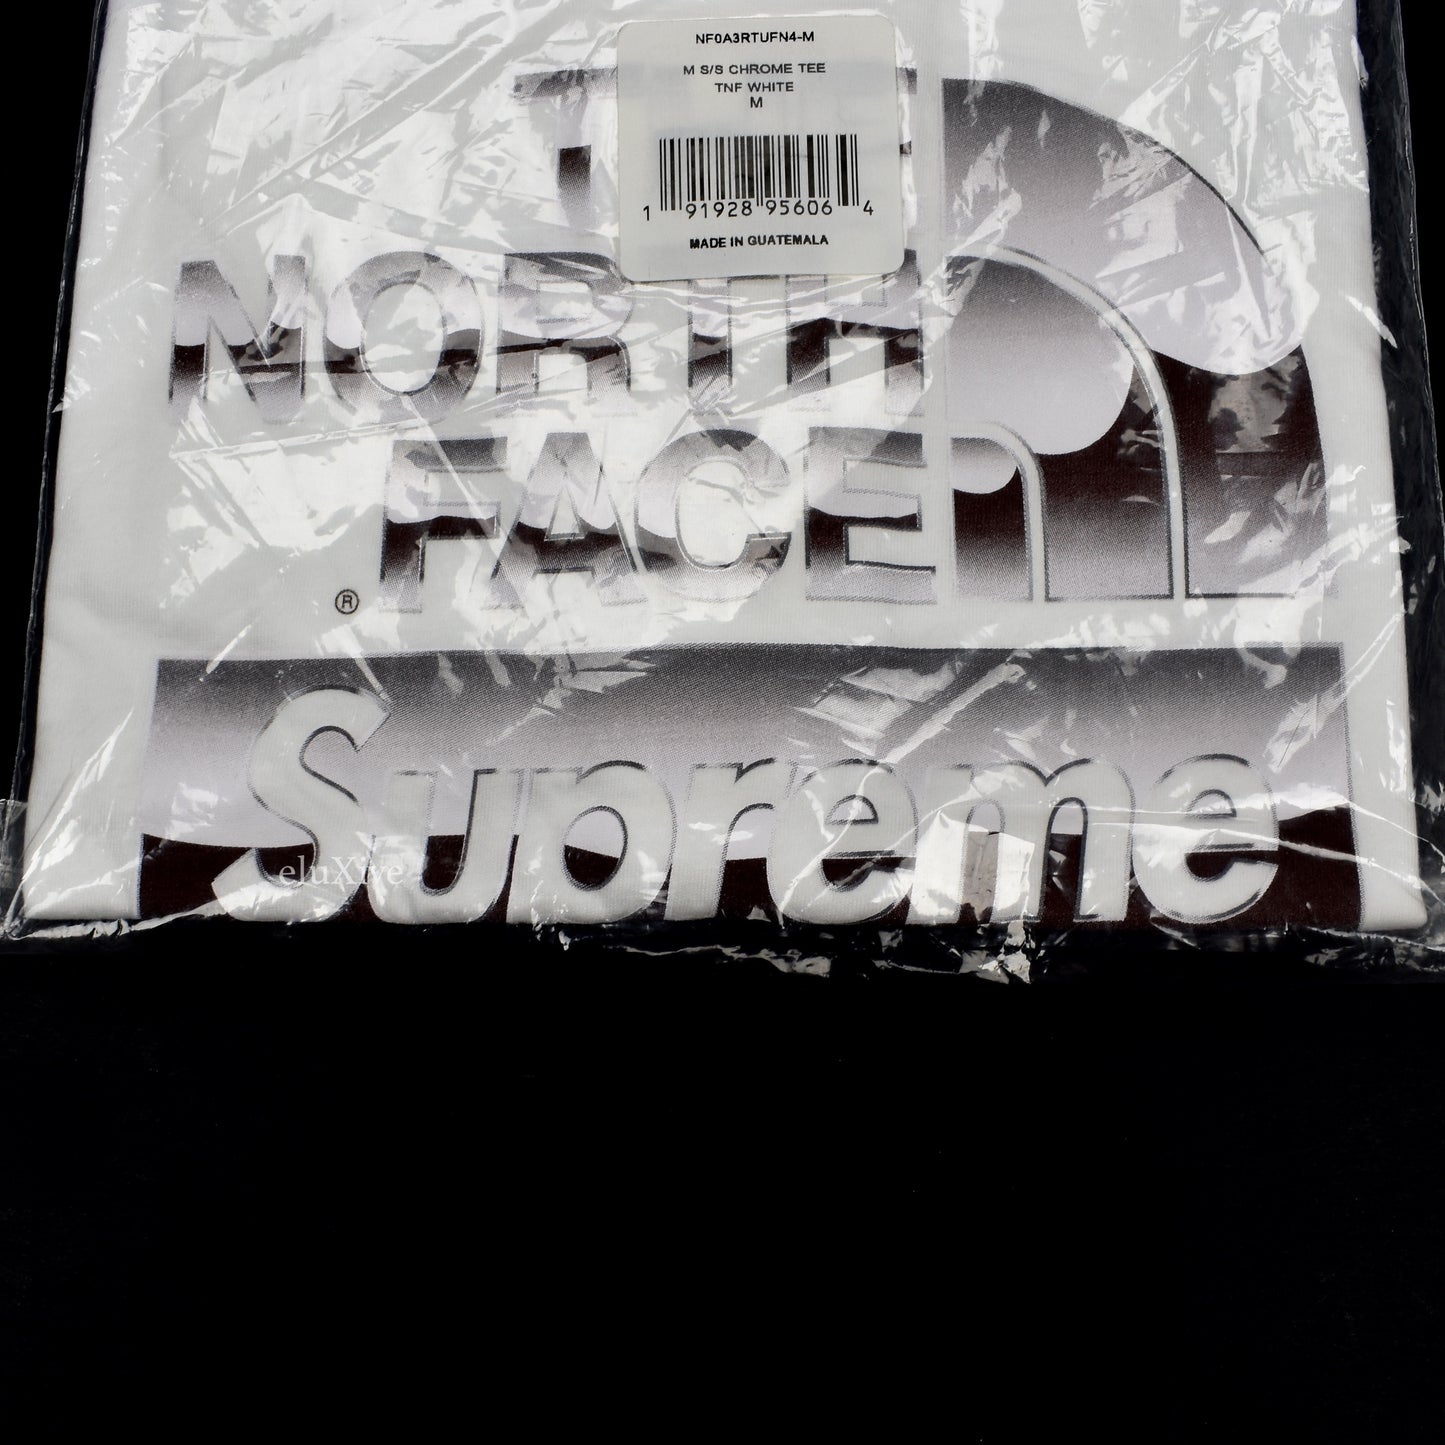 Supreme x The North Face - Metallic Box Logo T-Shirt (White)